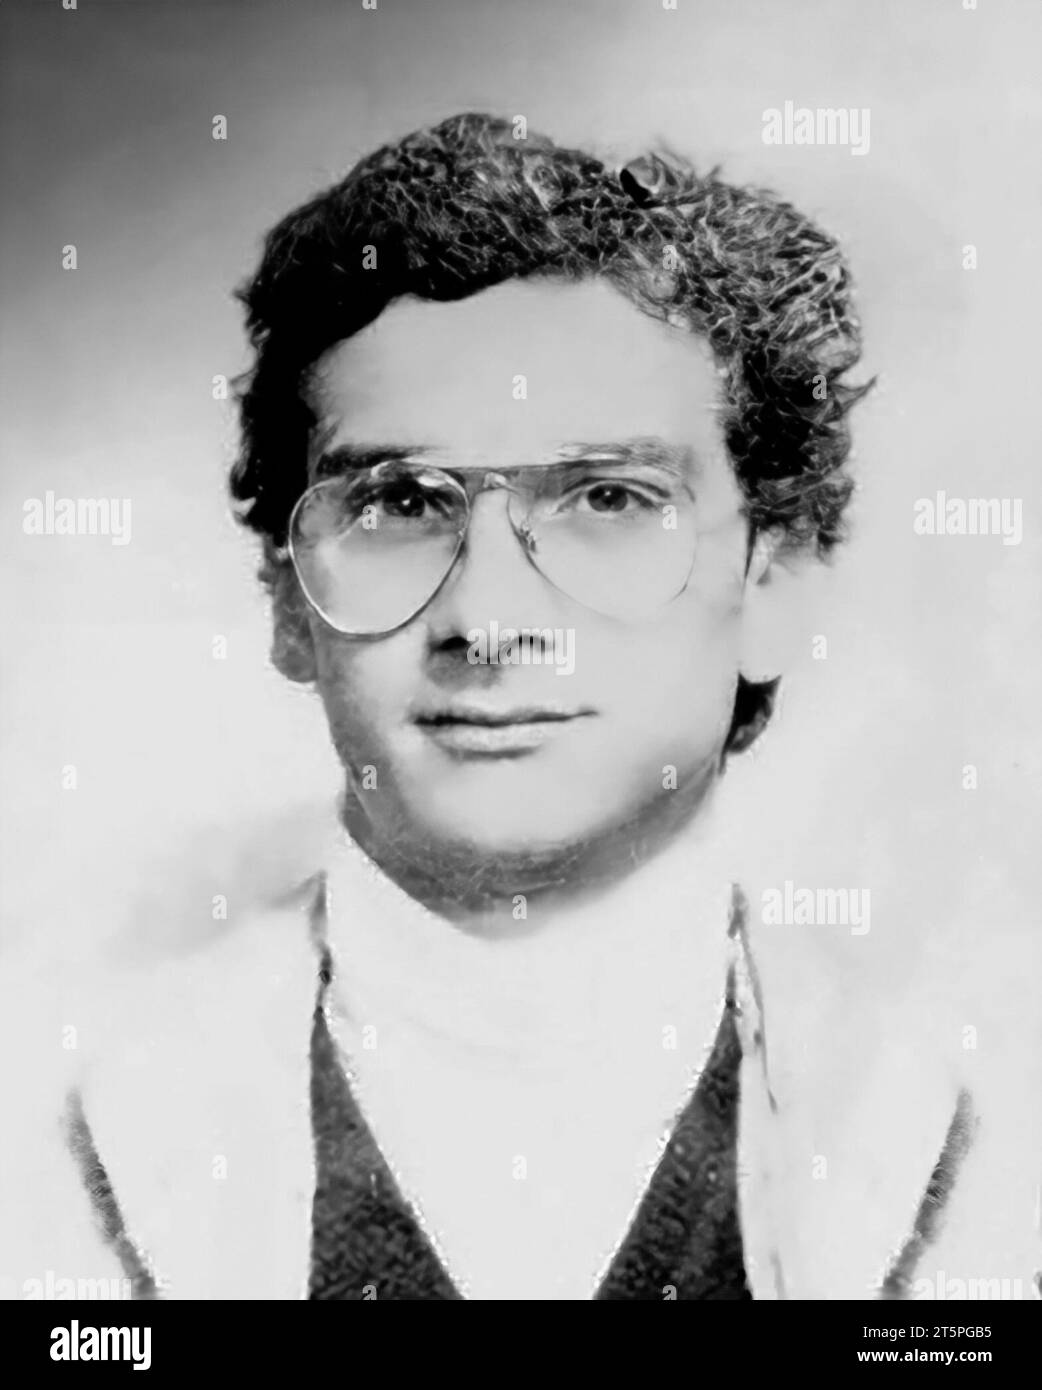 Messina Denaro. Portrait of the Sicilian Mafia boss, Matteo Messina Denaro (1962-2023), as a young man from his Identity Card (photo restored and retouched) Stock Photo